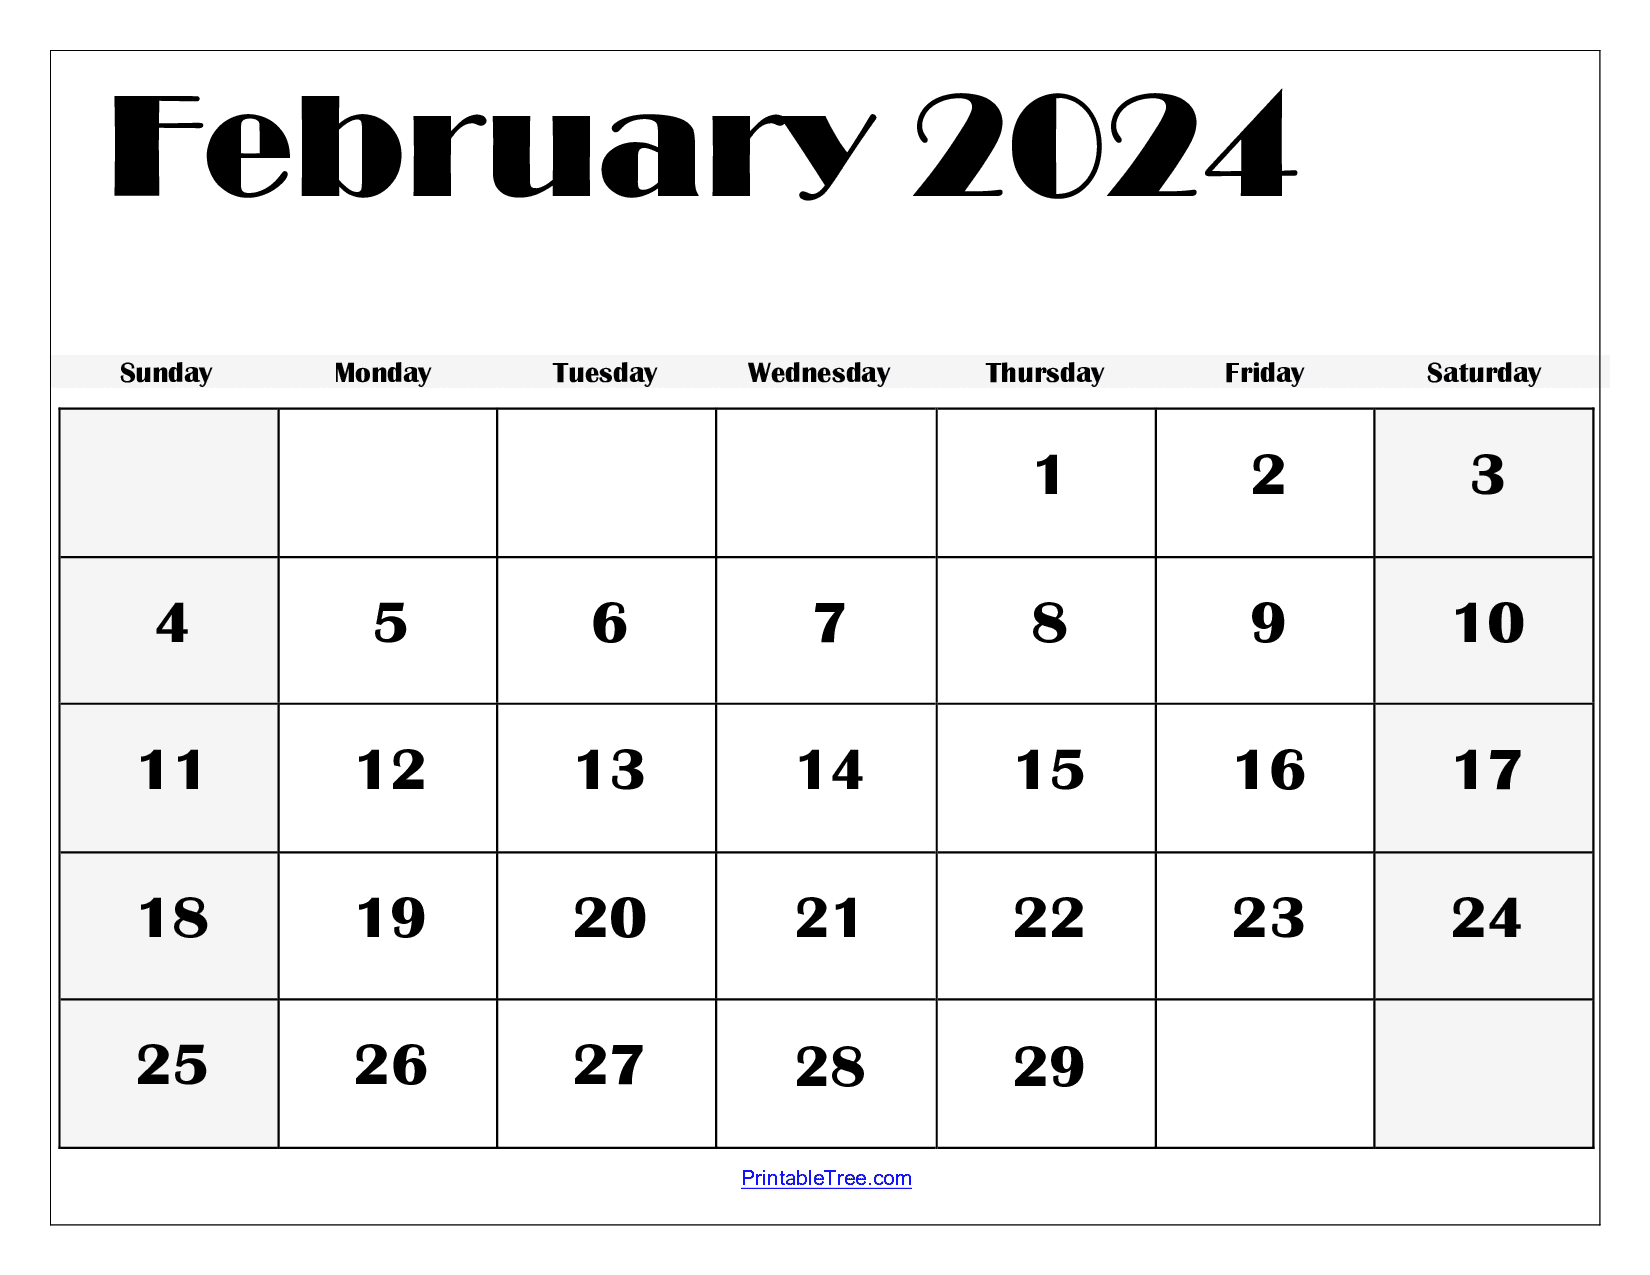 February 2024 Calendar Printable Pdf Template With Holidays for Free Printable Calendar 2024 February